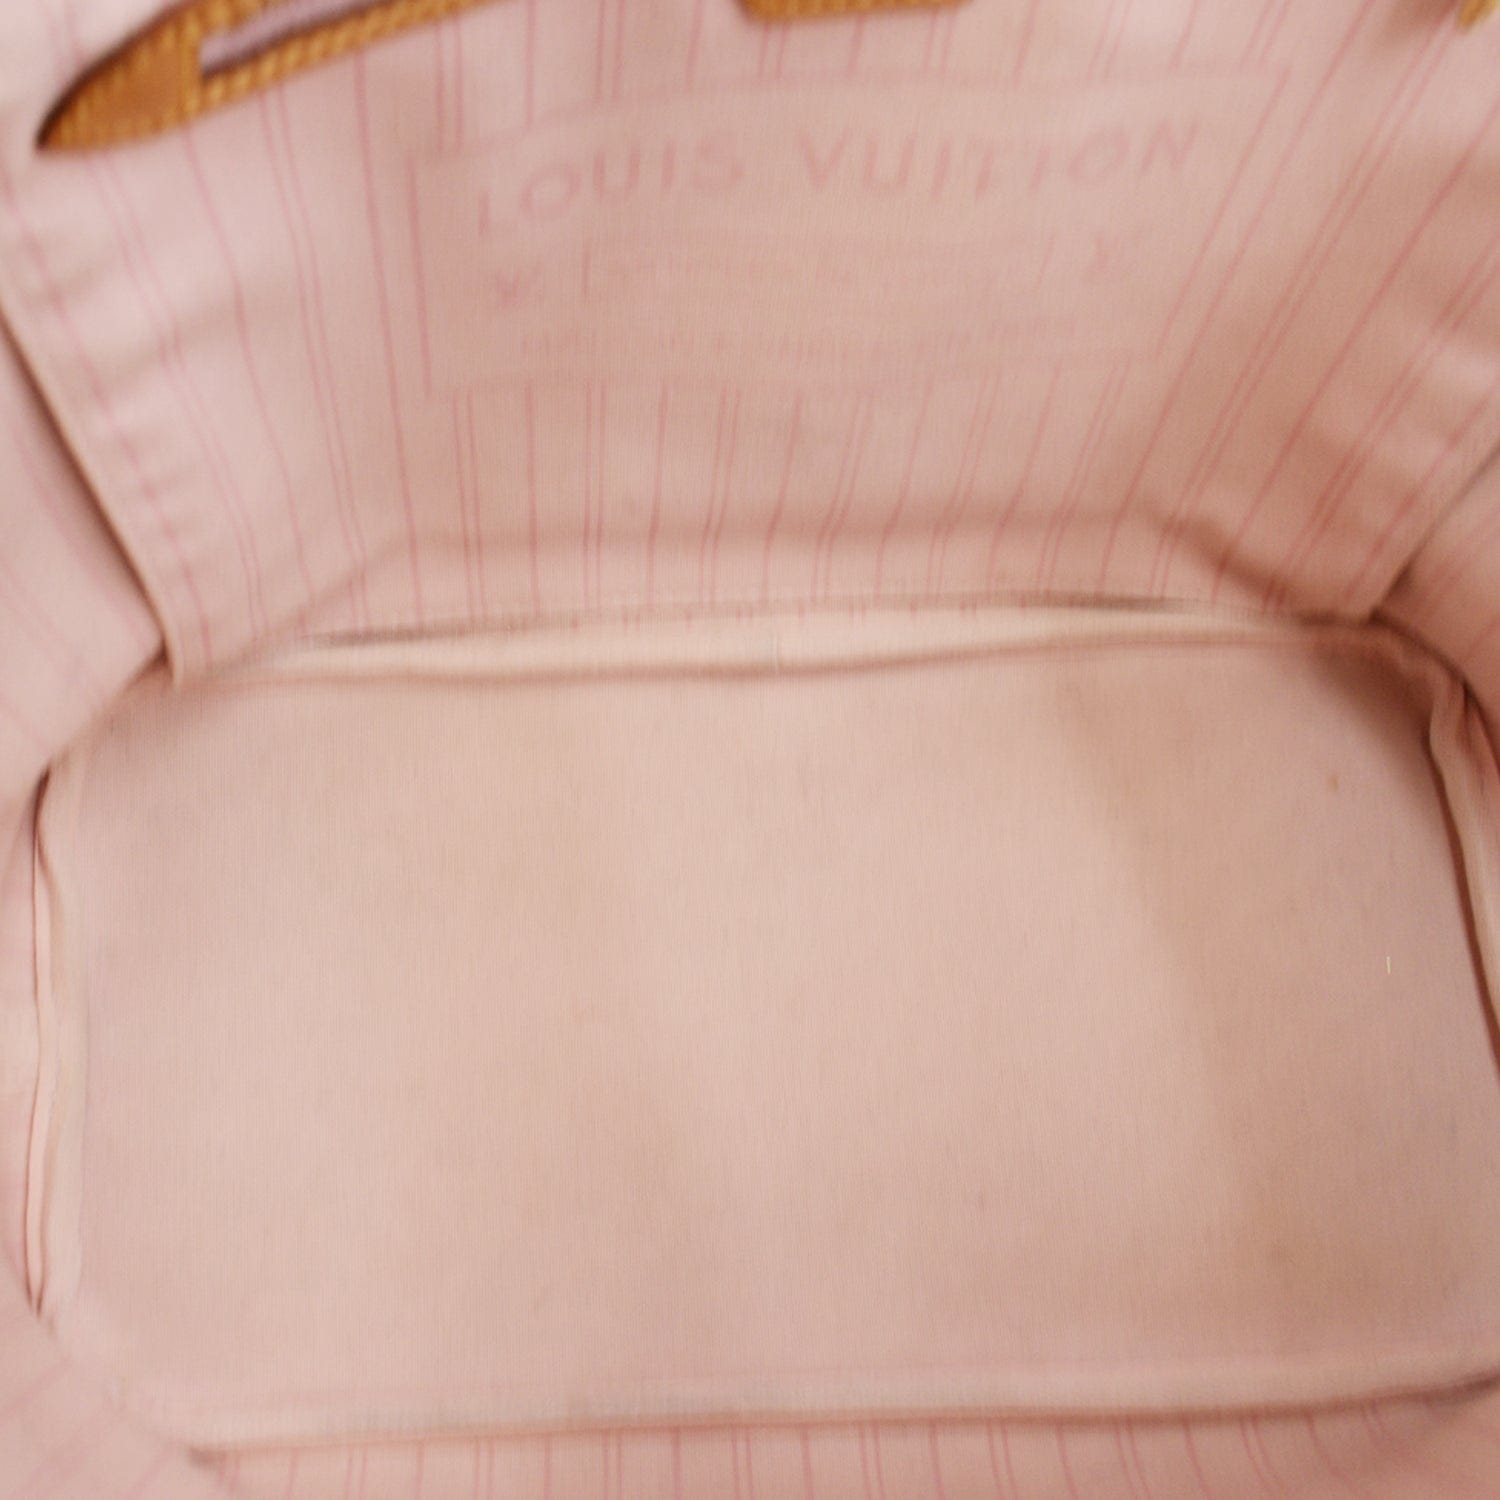 Rare! Louis Vuitton Damier Azur Neverfull MM SL Rose Pink Braided Strap!